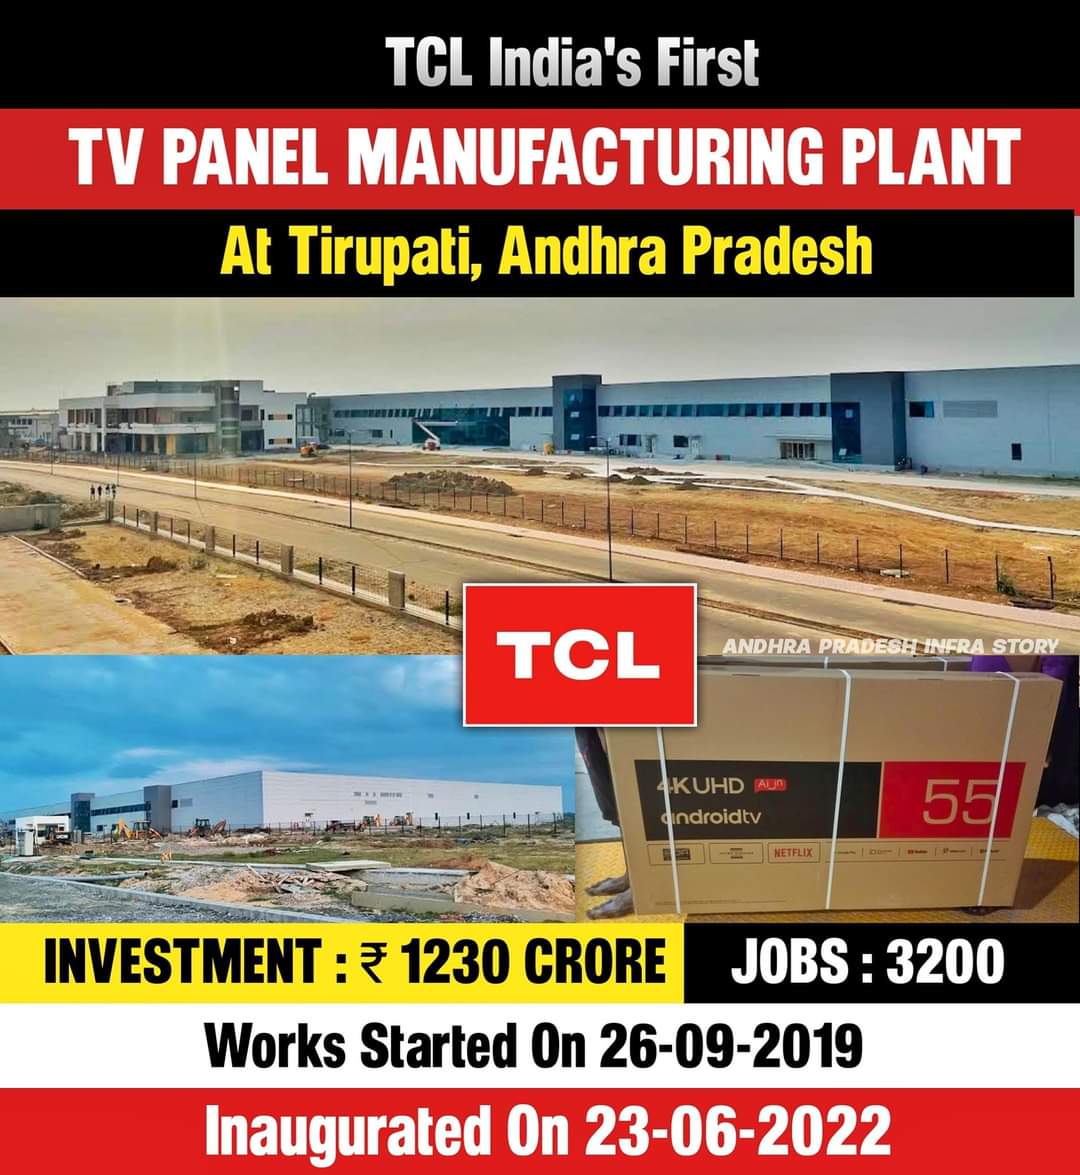 🔸 Tirupati Emerging As A Electronics Manufacturing Hub 😍 

#AndhraPradesh #TCL #TVManufacturing #Tirupati #AdvantageAP #APInfraStory